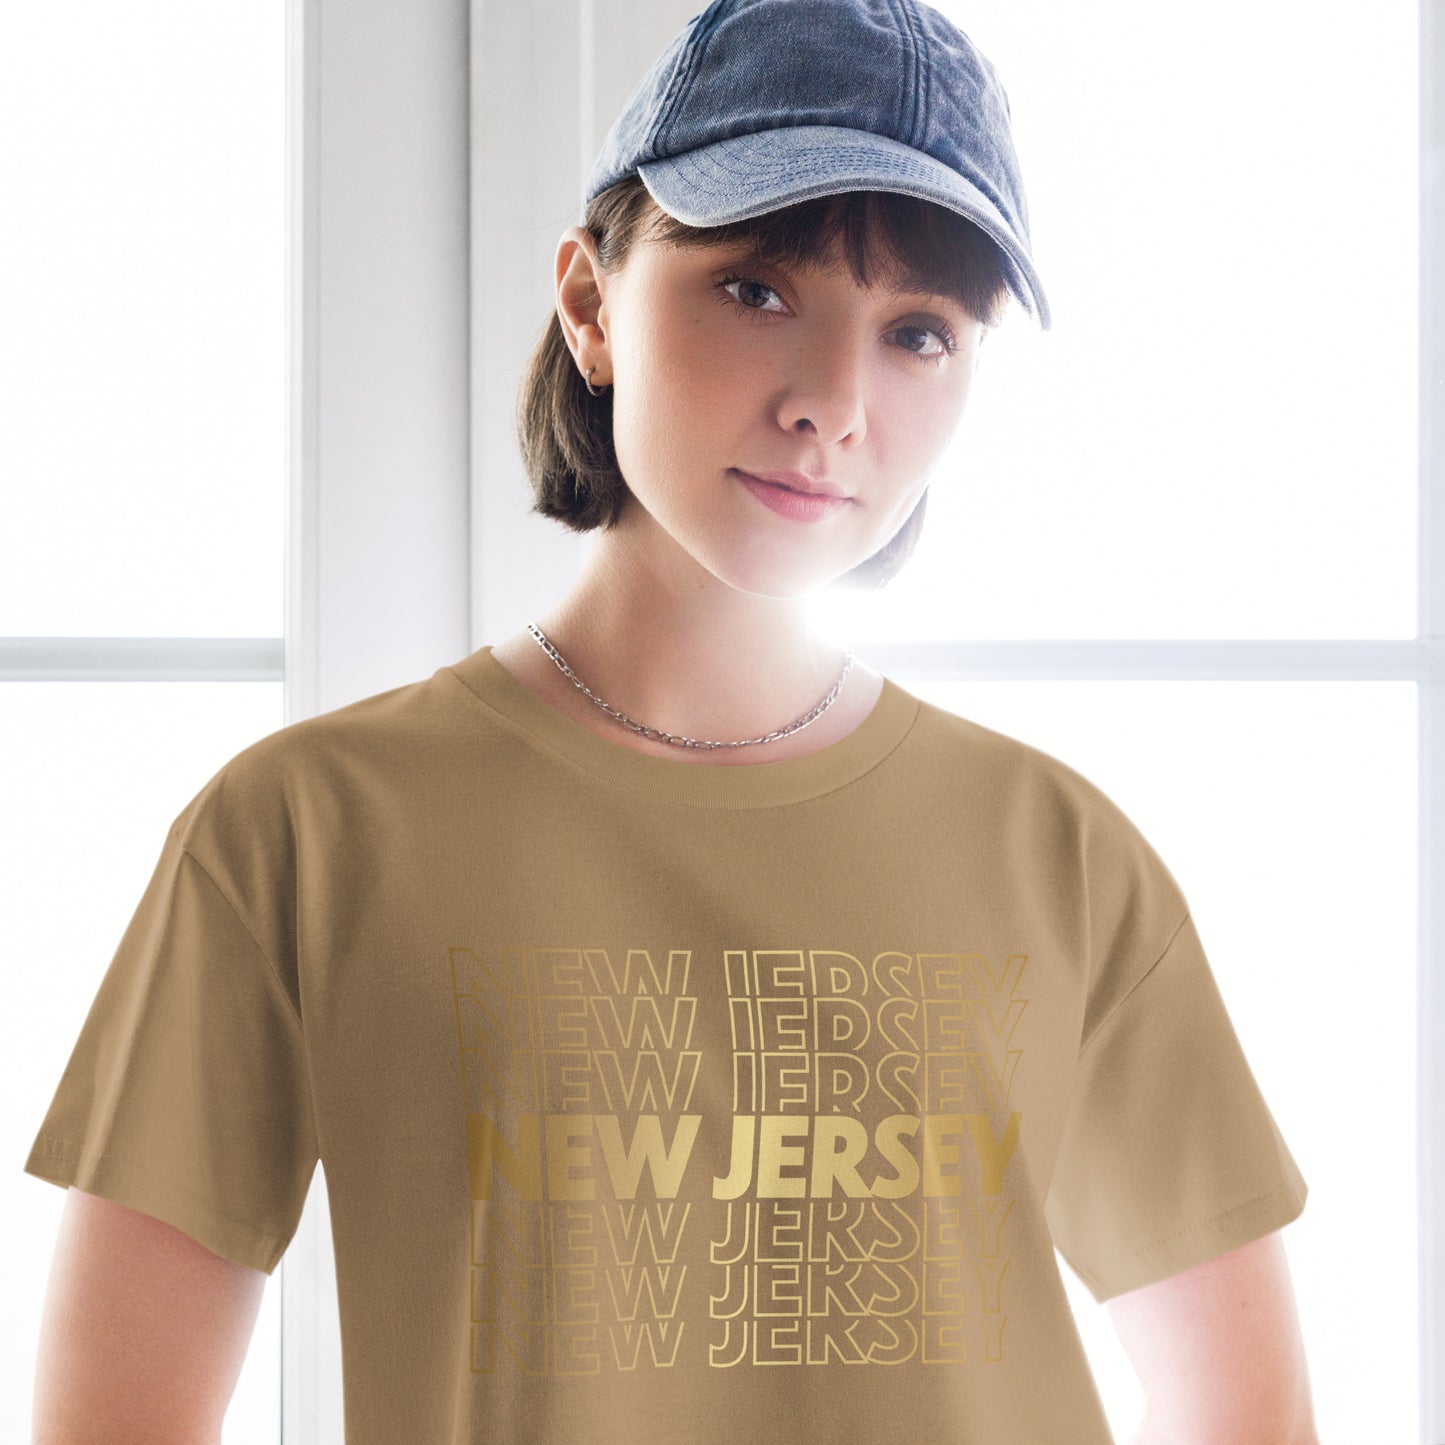 Women’s crop top - New Jersey (G)